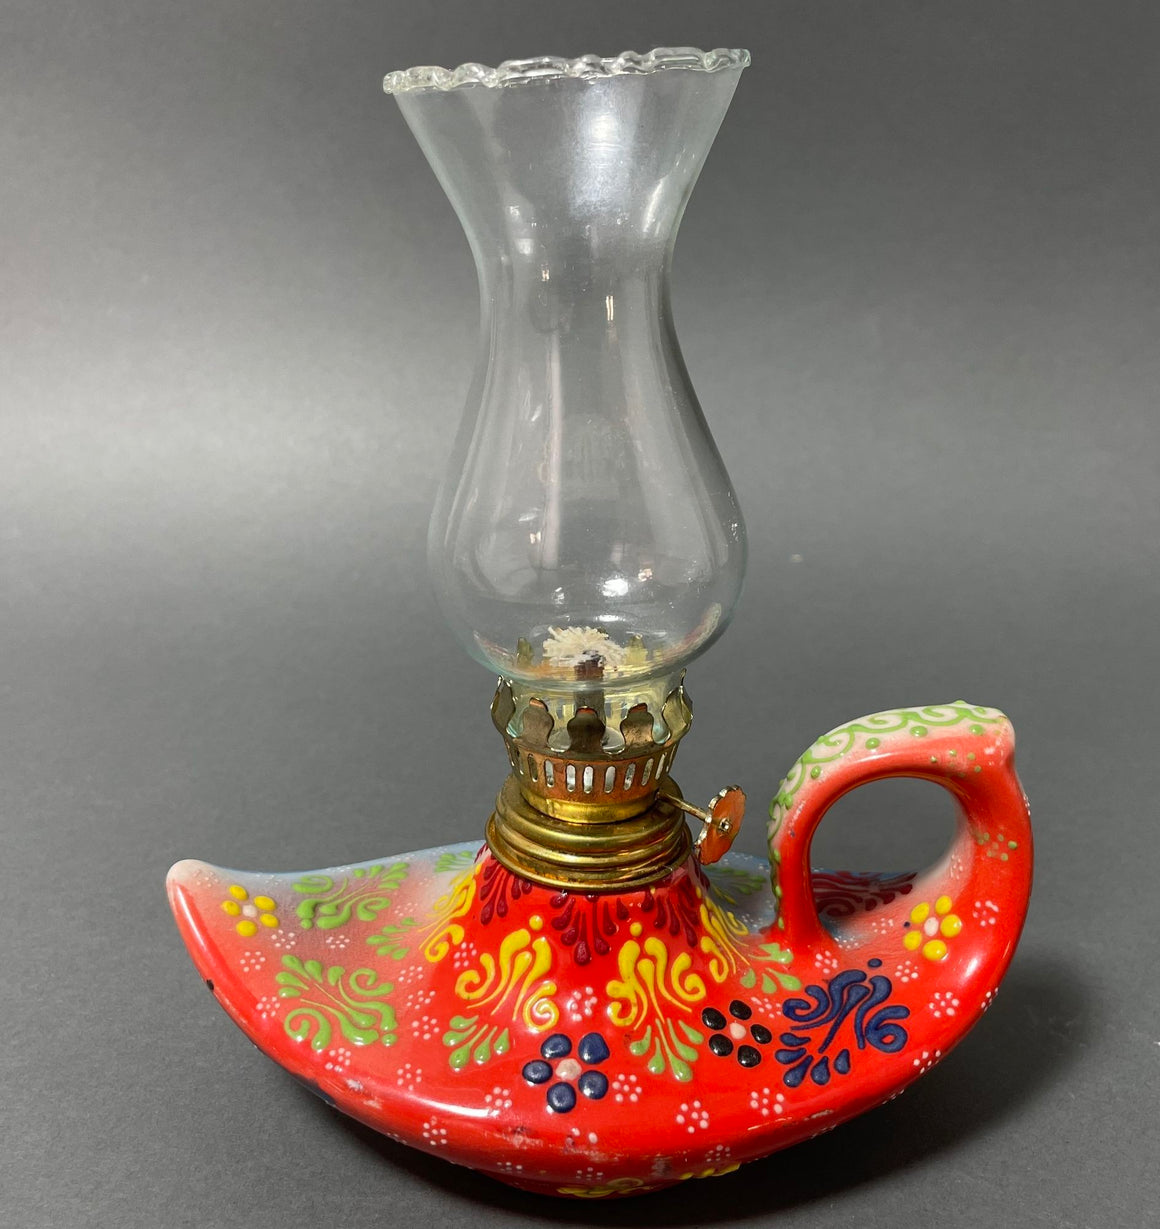 Aladdin style handmade red ceramic Turkish oil lamp